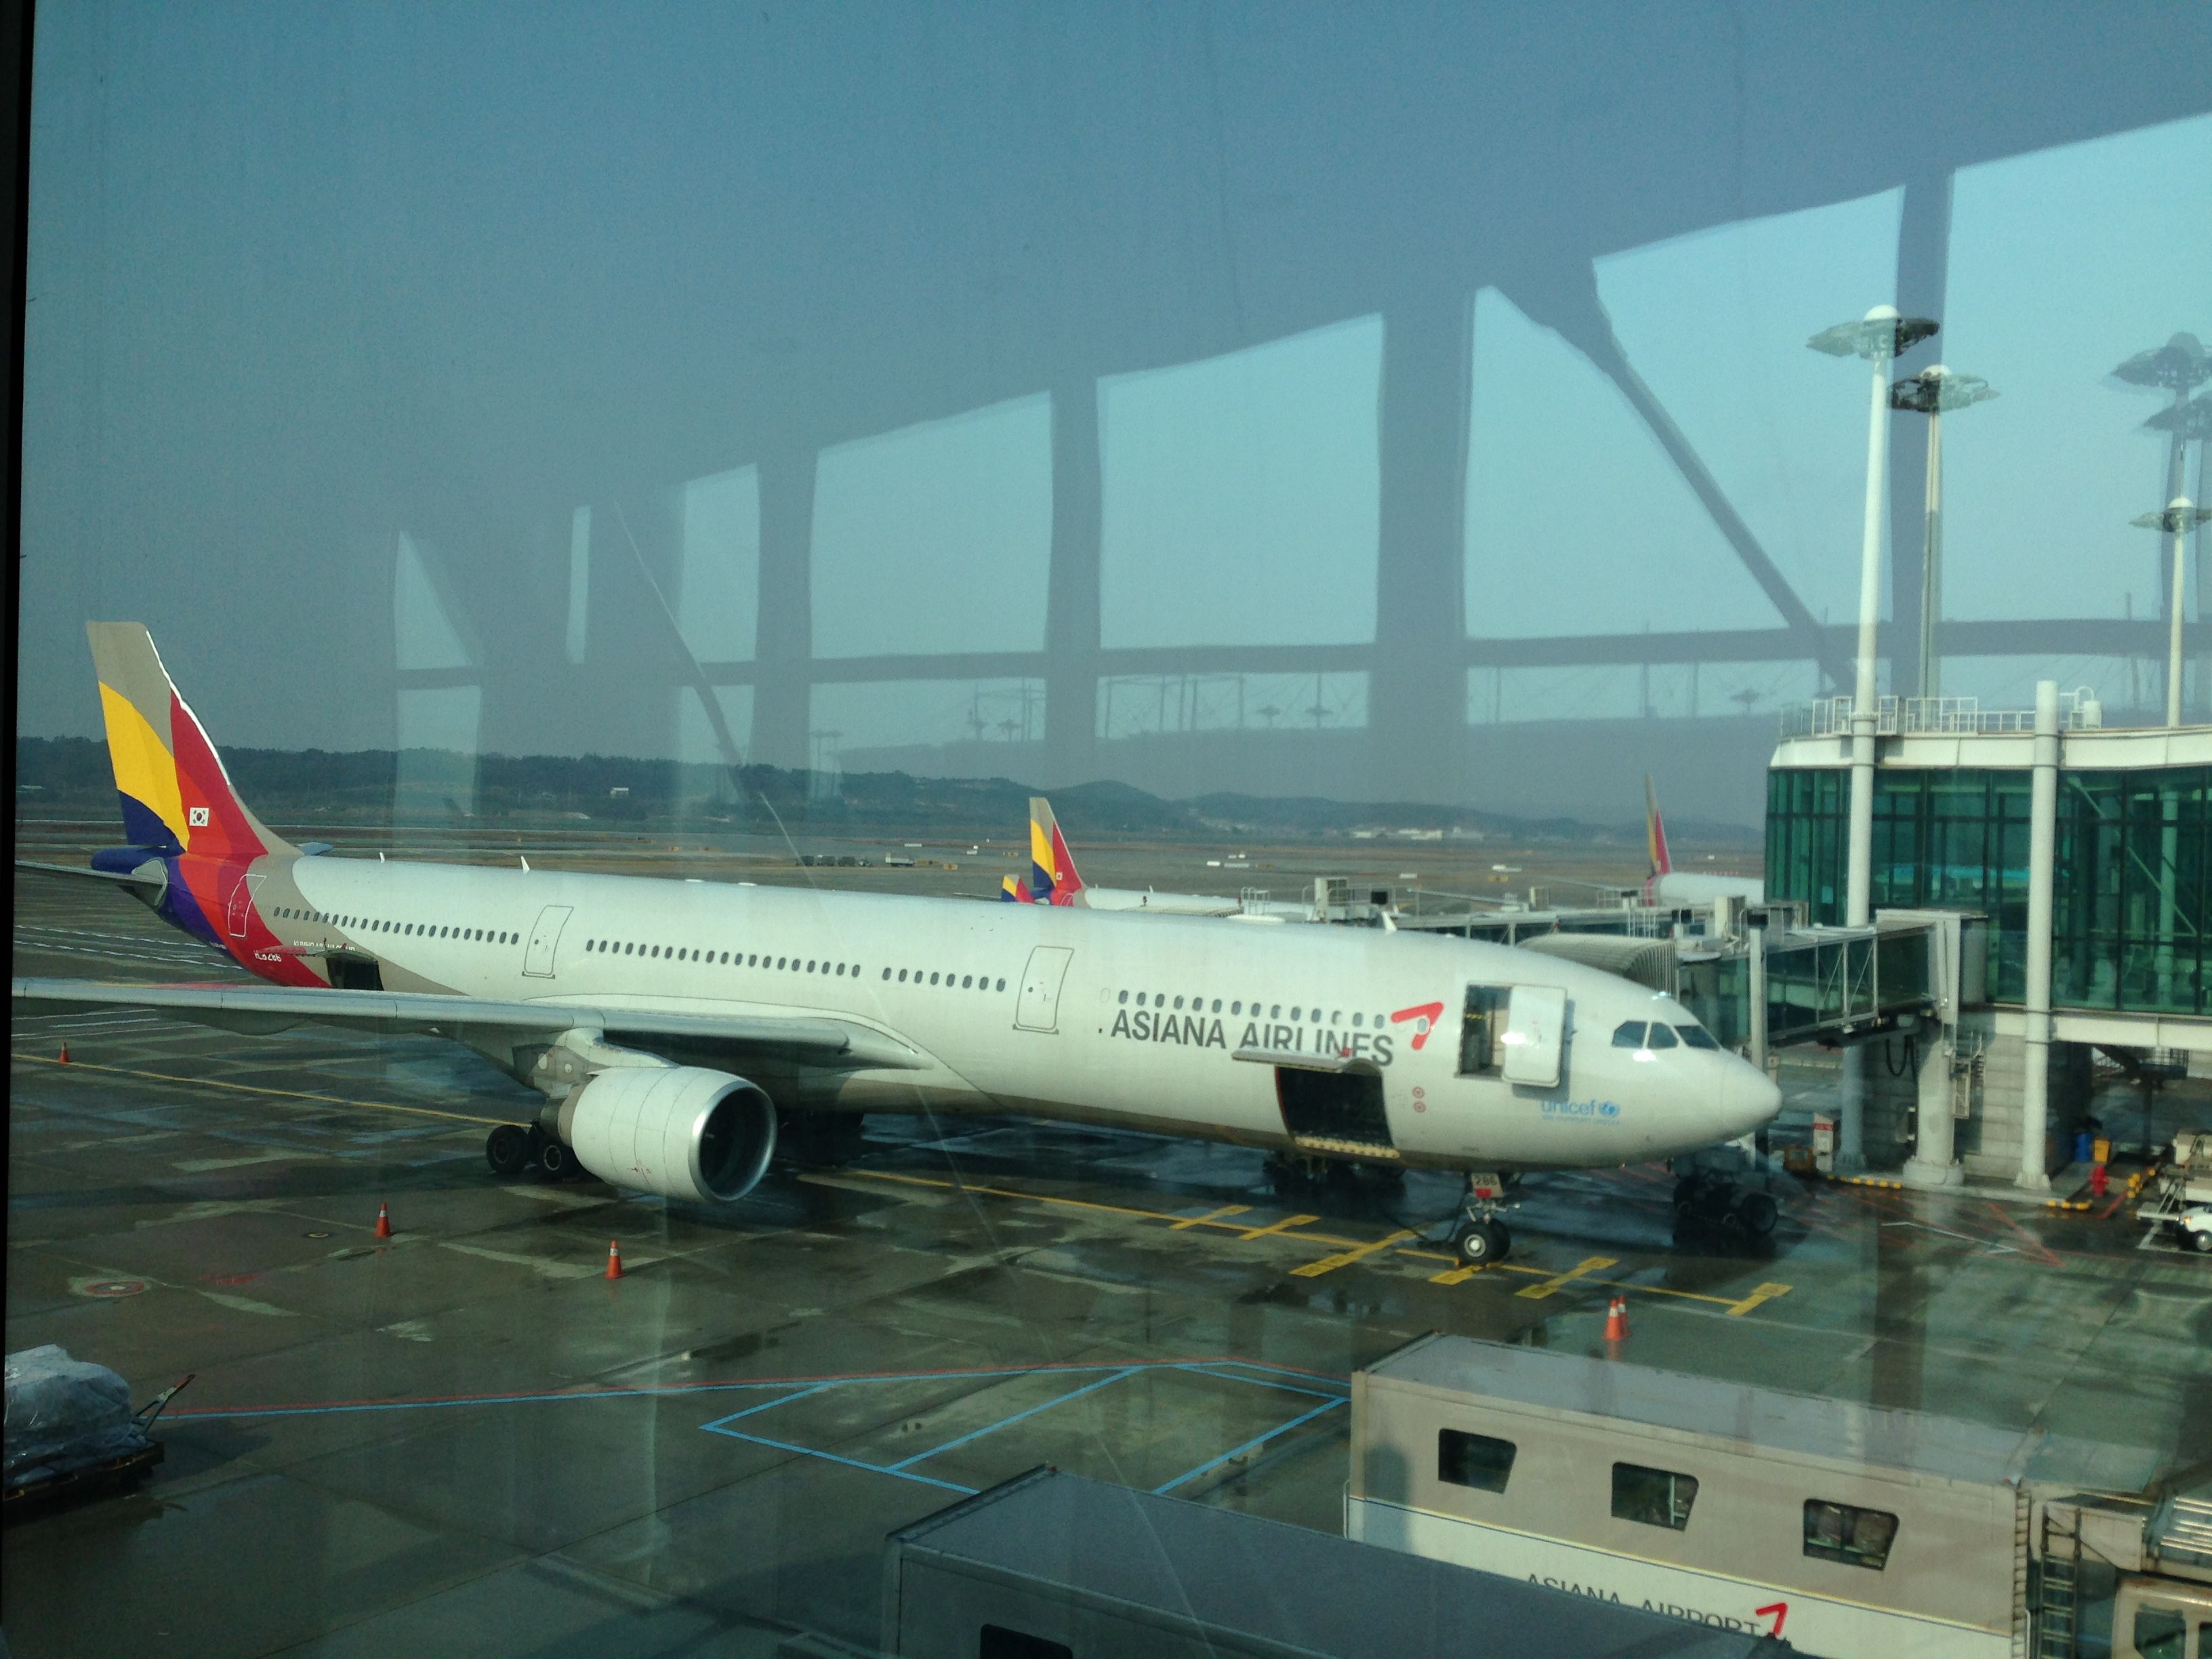 jfk airport asiana flight arrival times